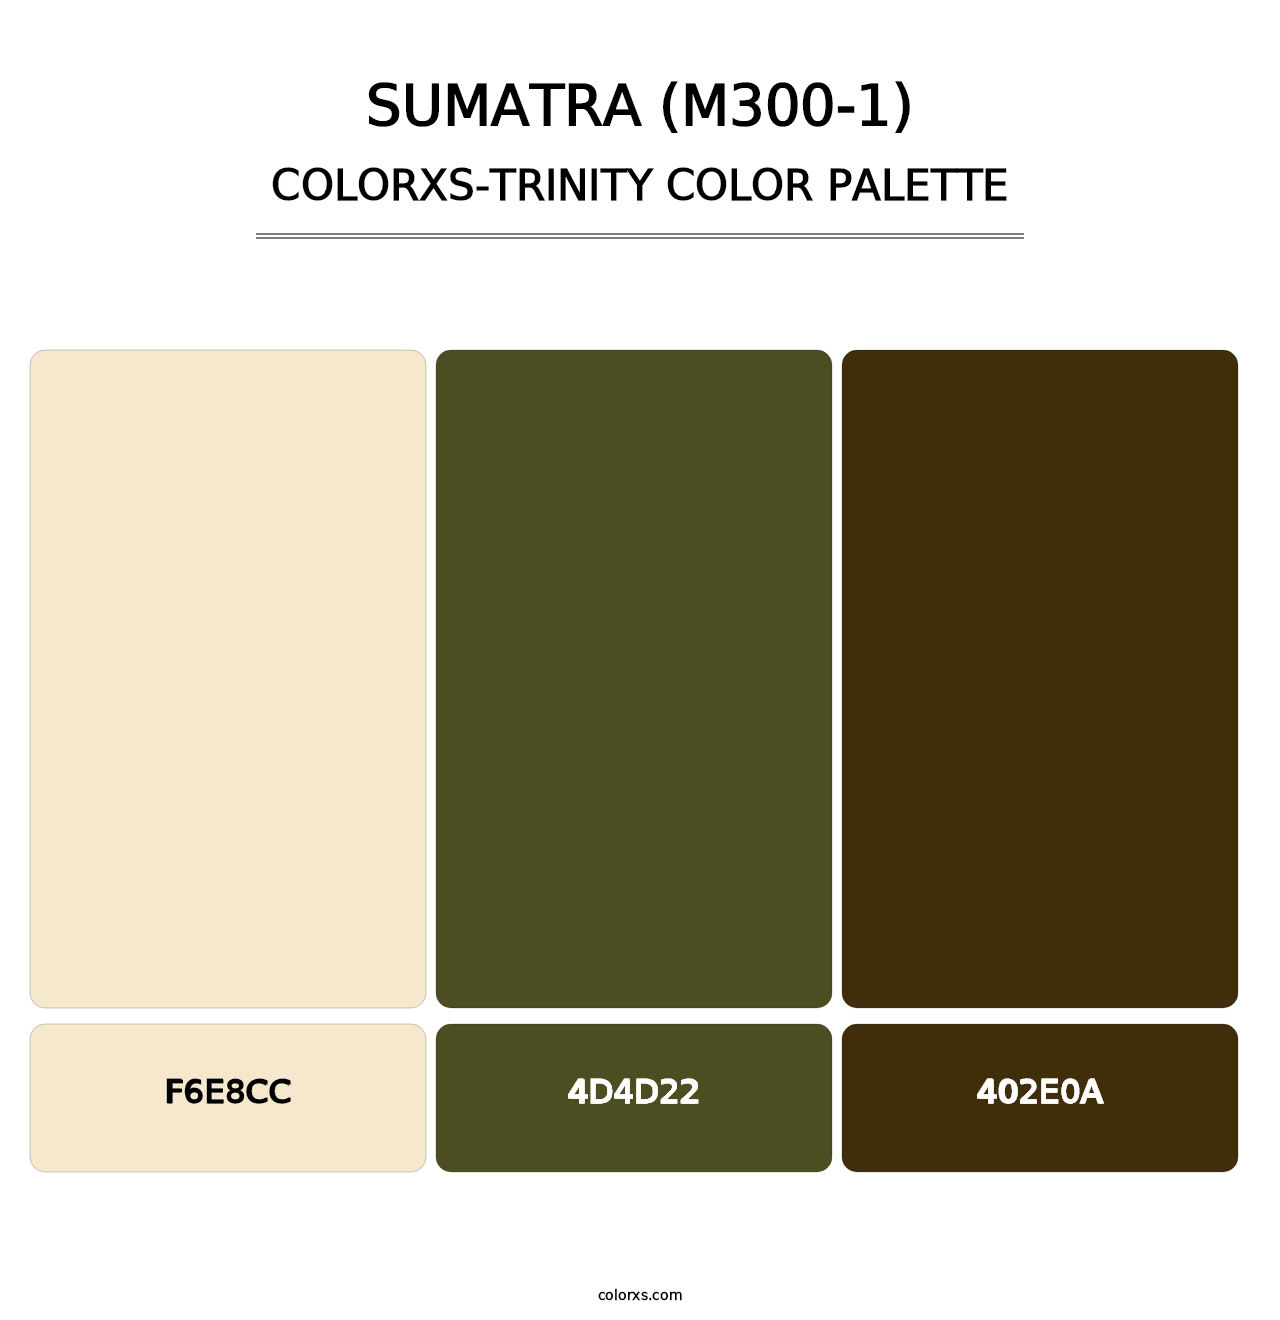 Sumatra (M300-1) - Colorxs Trinity Palette